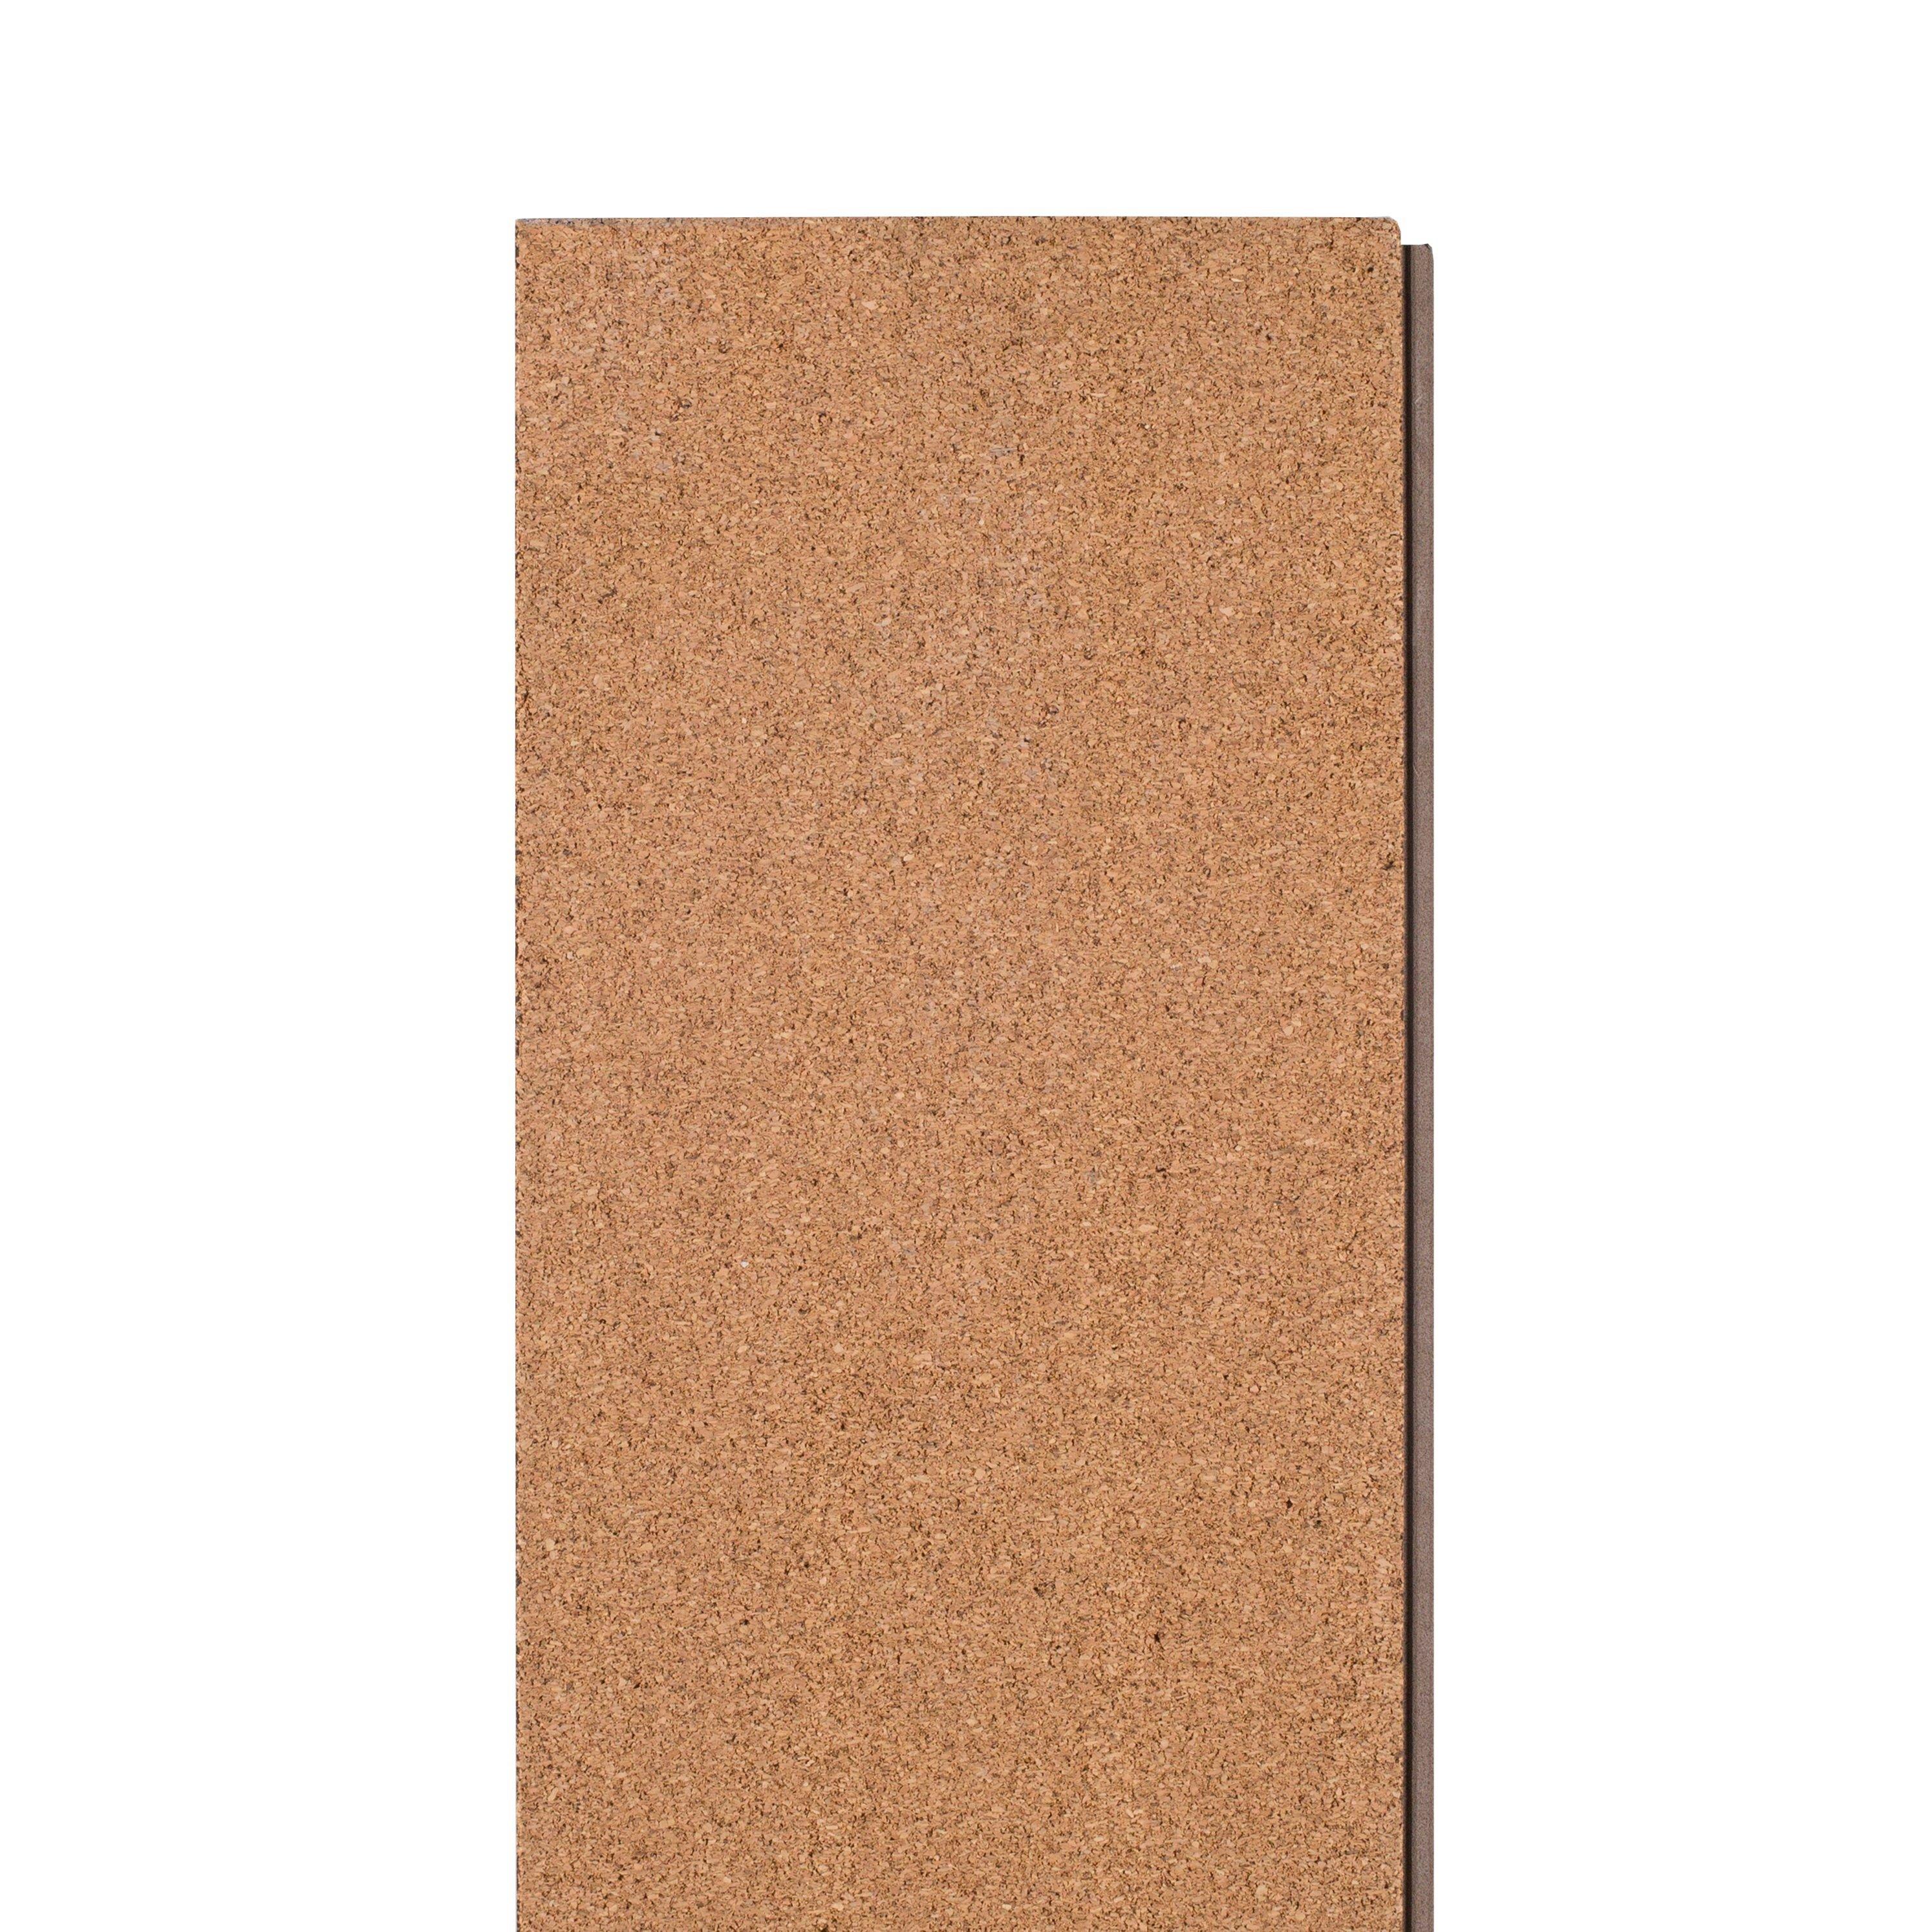 Hazelnut Ceruse Rigid Core Luxury Vinyl Plank - Cork Back